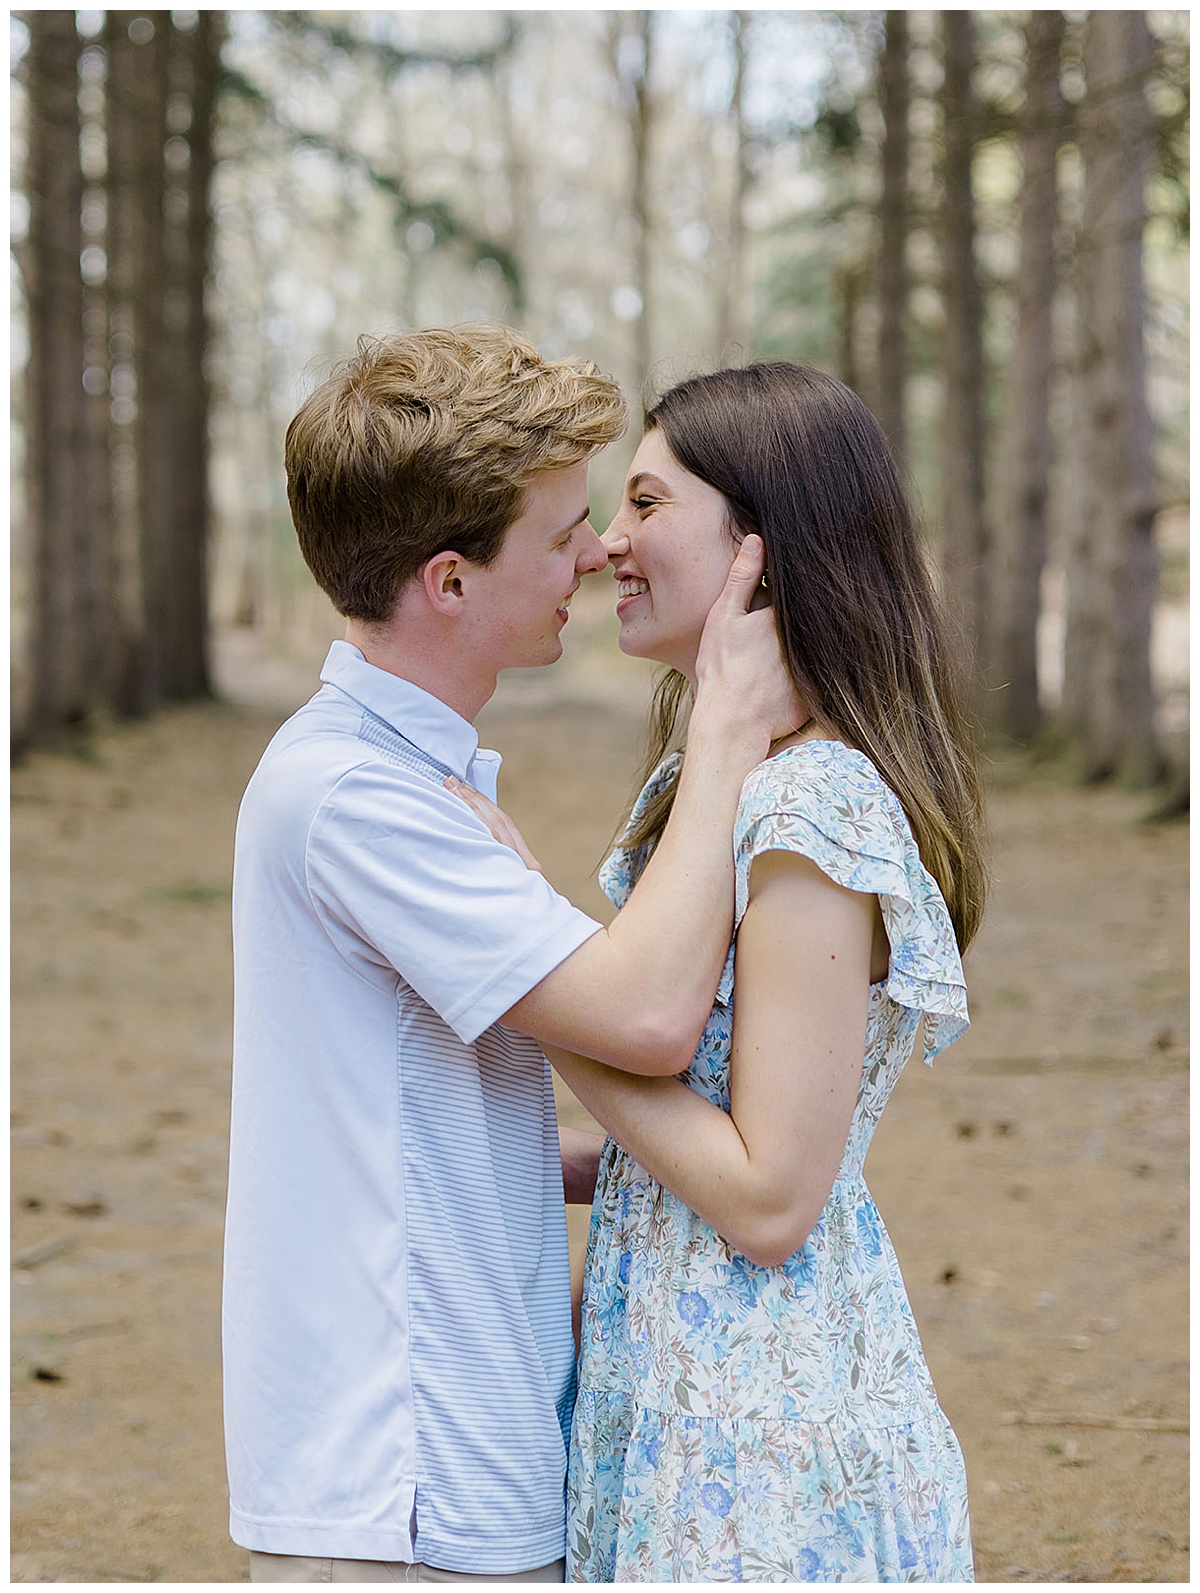 Man and woman share a kiss for Kayla Bouren Photography
